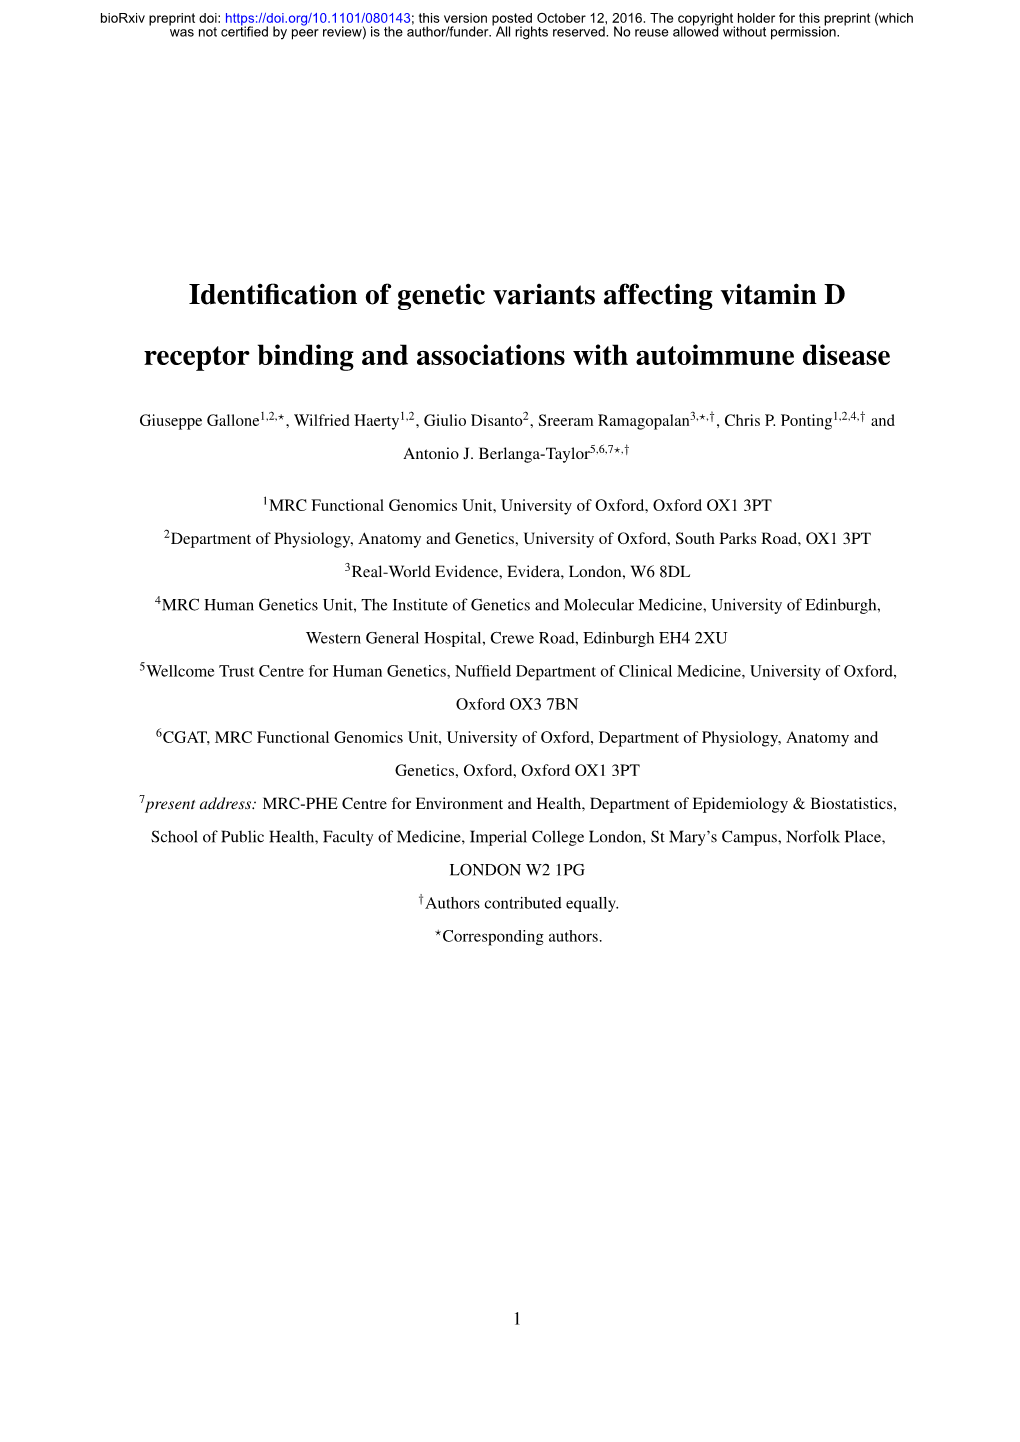 Identification of Genetic Variants Affecting Vitamin D